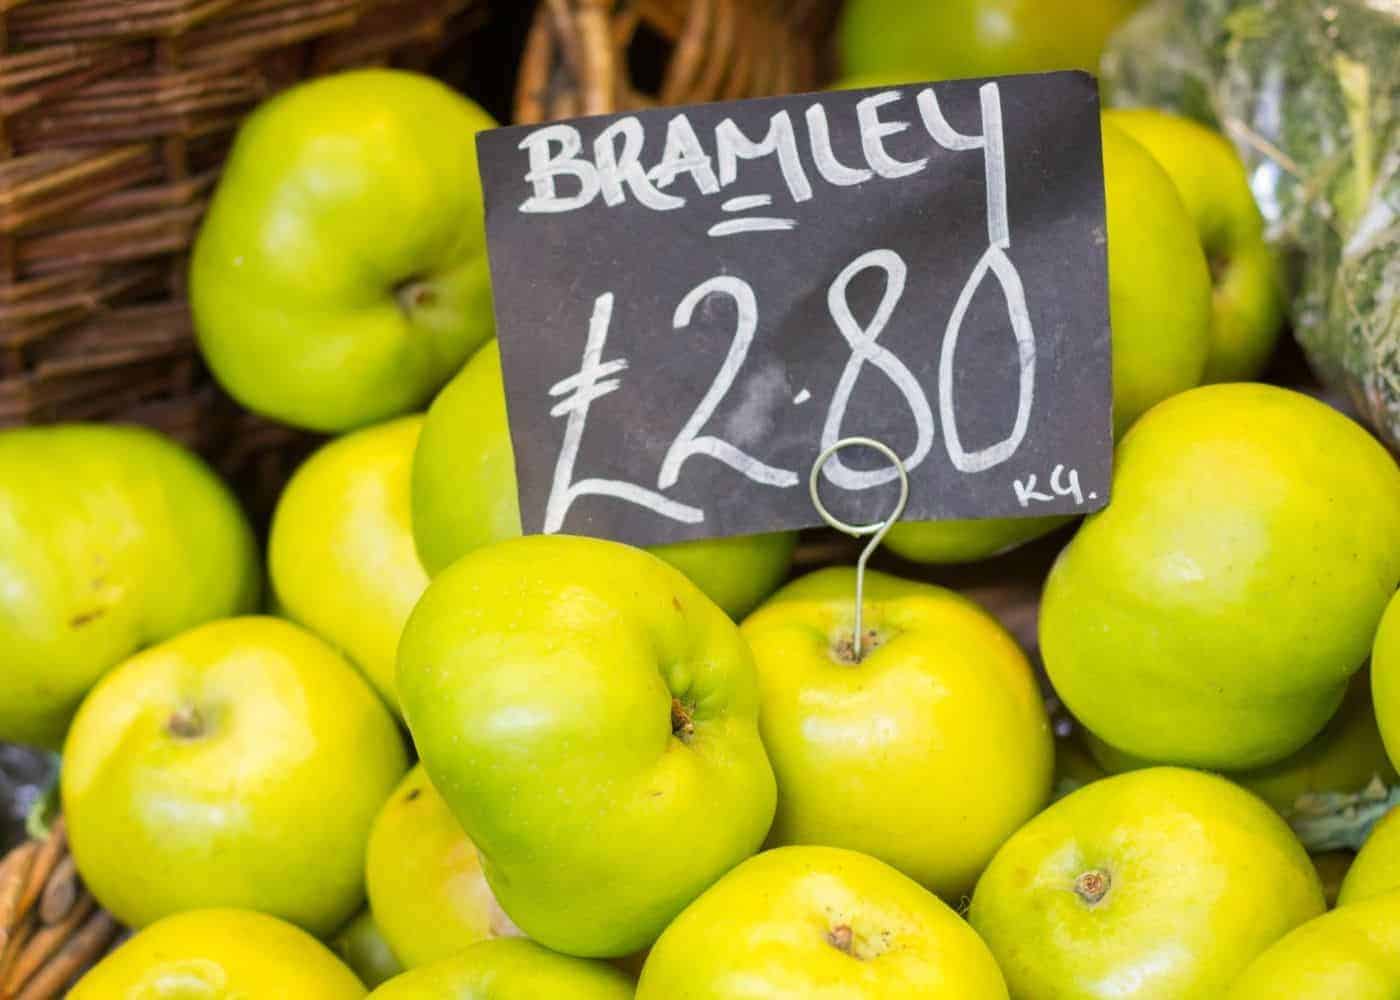 Bramley apples for baking english apple pie